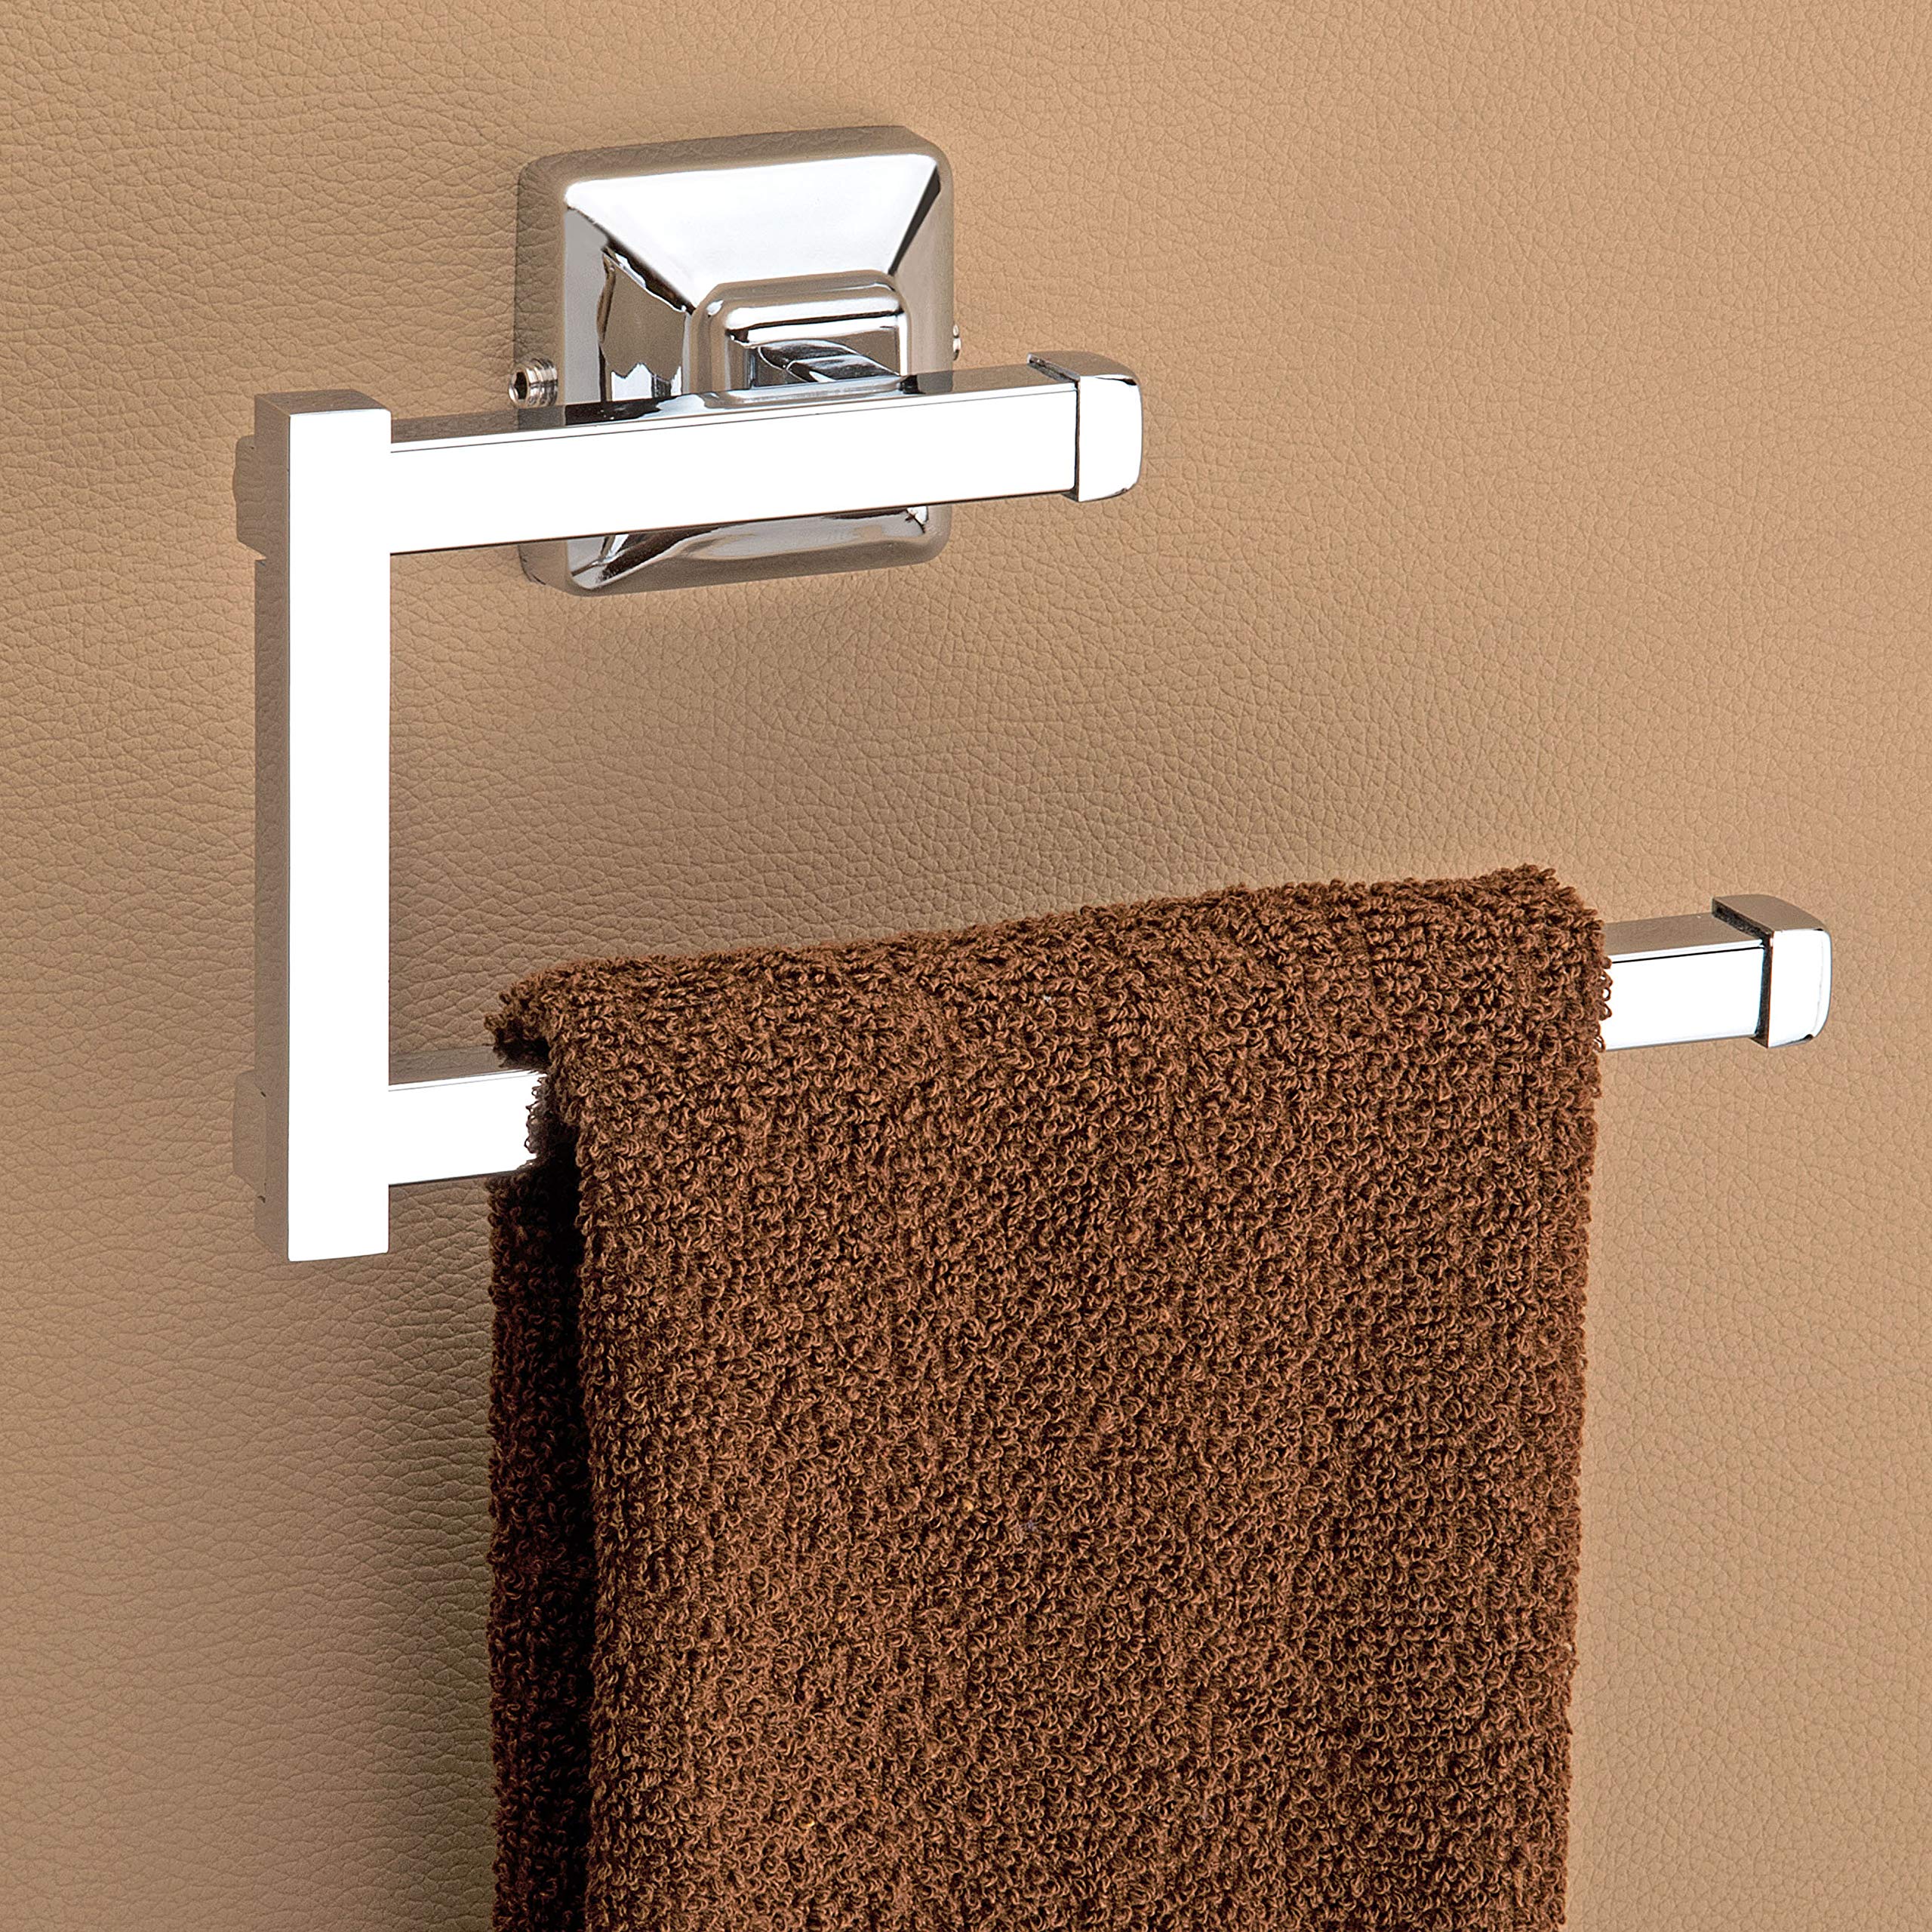 Wall Mount Bathroom Towel Rack Towel Bar Bath Robe Towel Holder Rustproof  Storage with Hooks er for Balcony Kitchen Hotel , 23.62x8.27x7.36inch -  Walmart.com